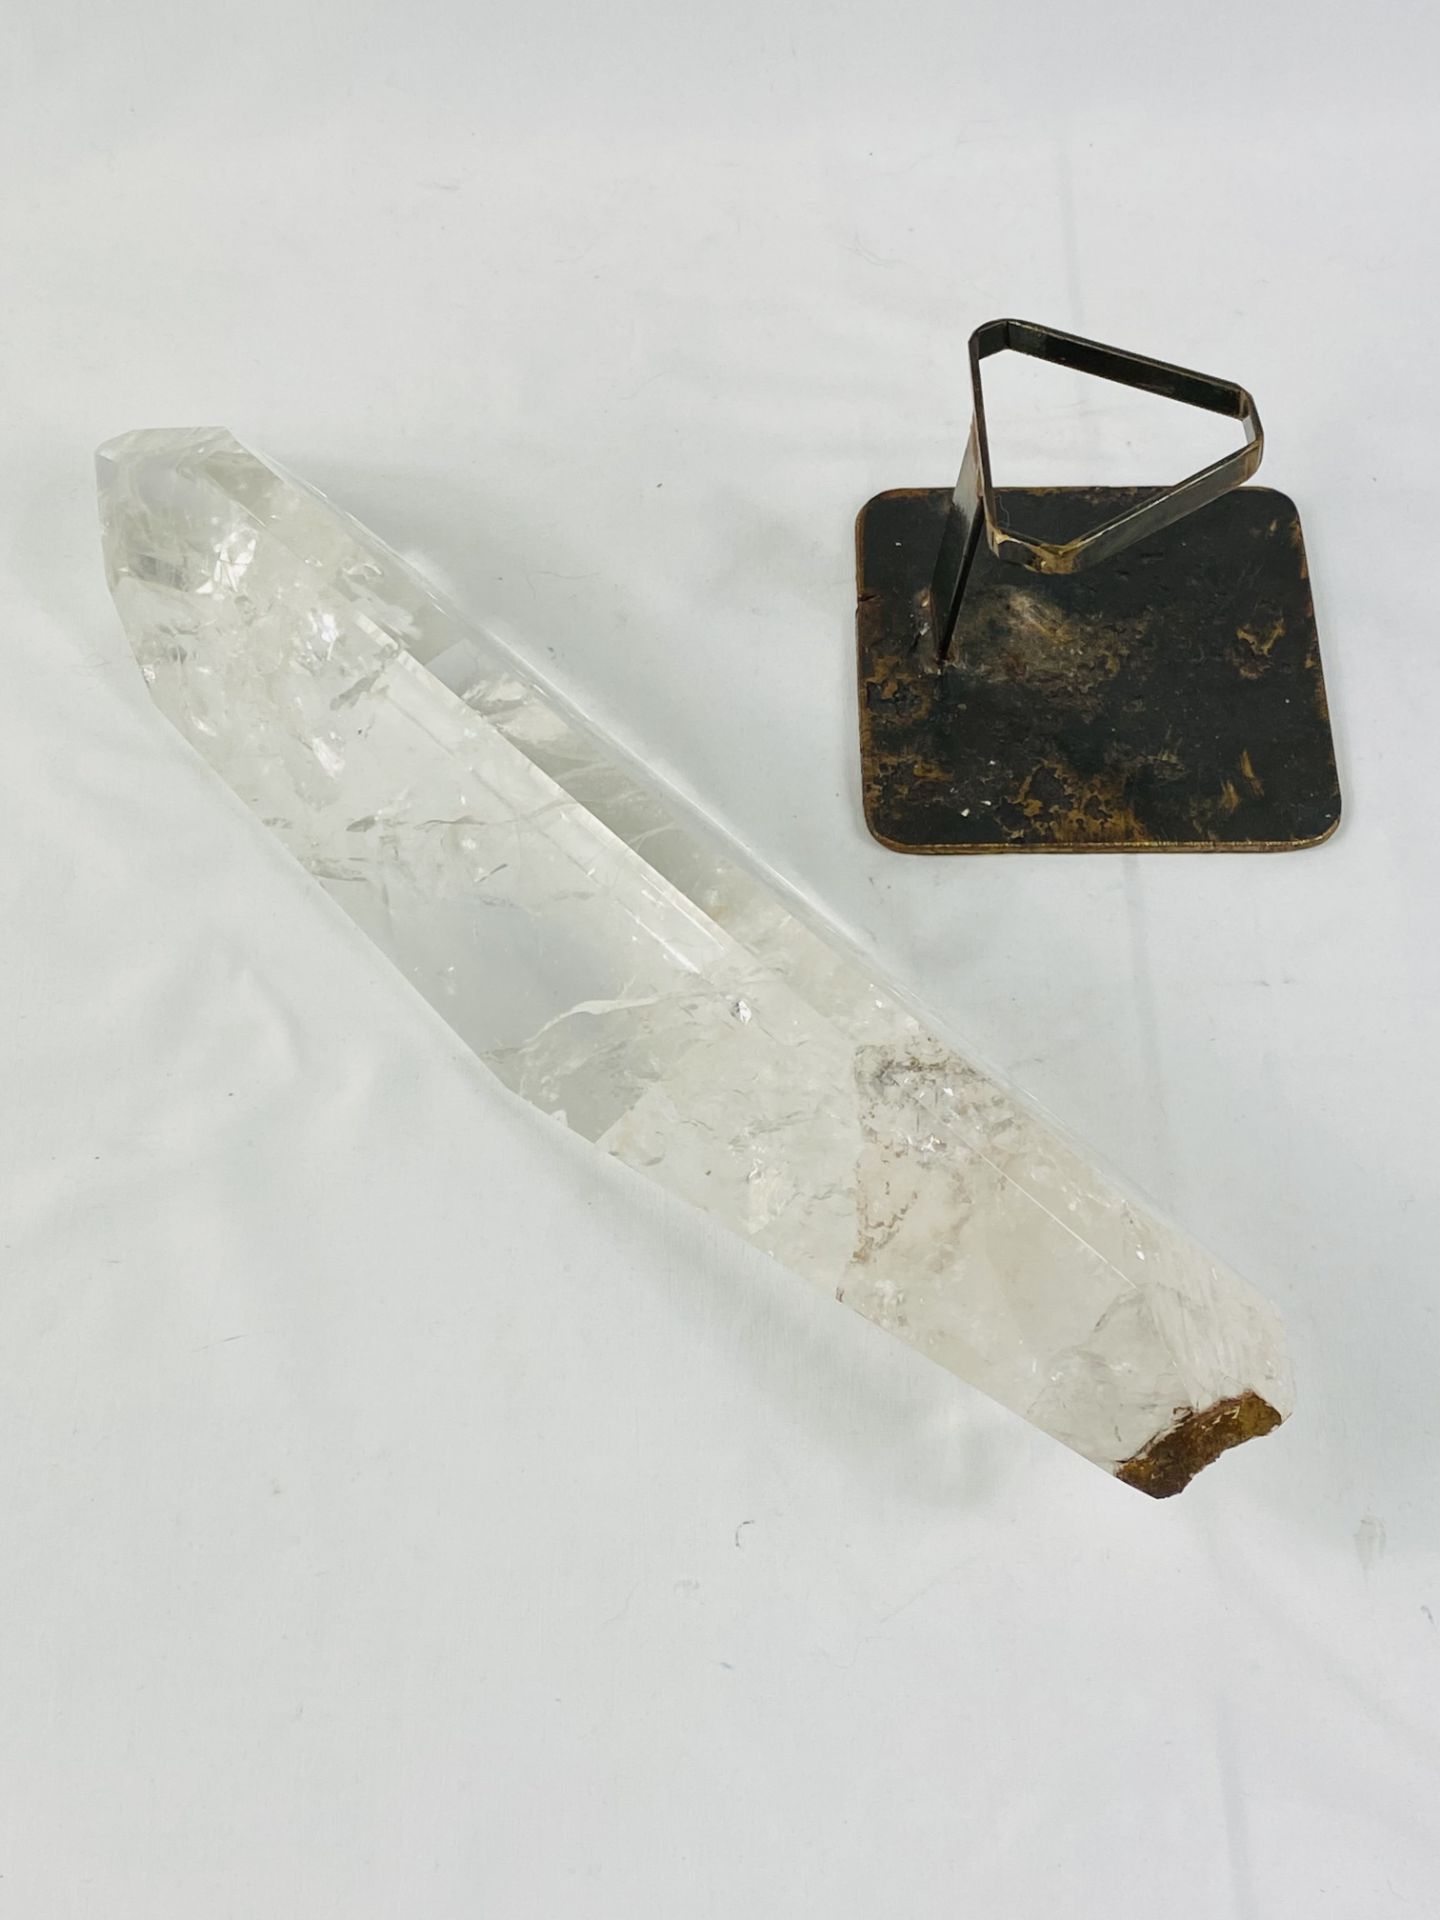 Polished rock crystal mounted in metal base - Image 5 of 6